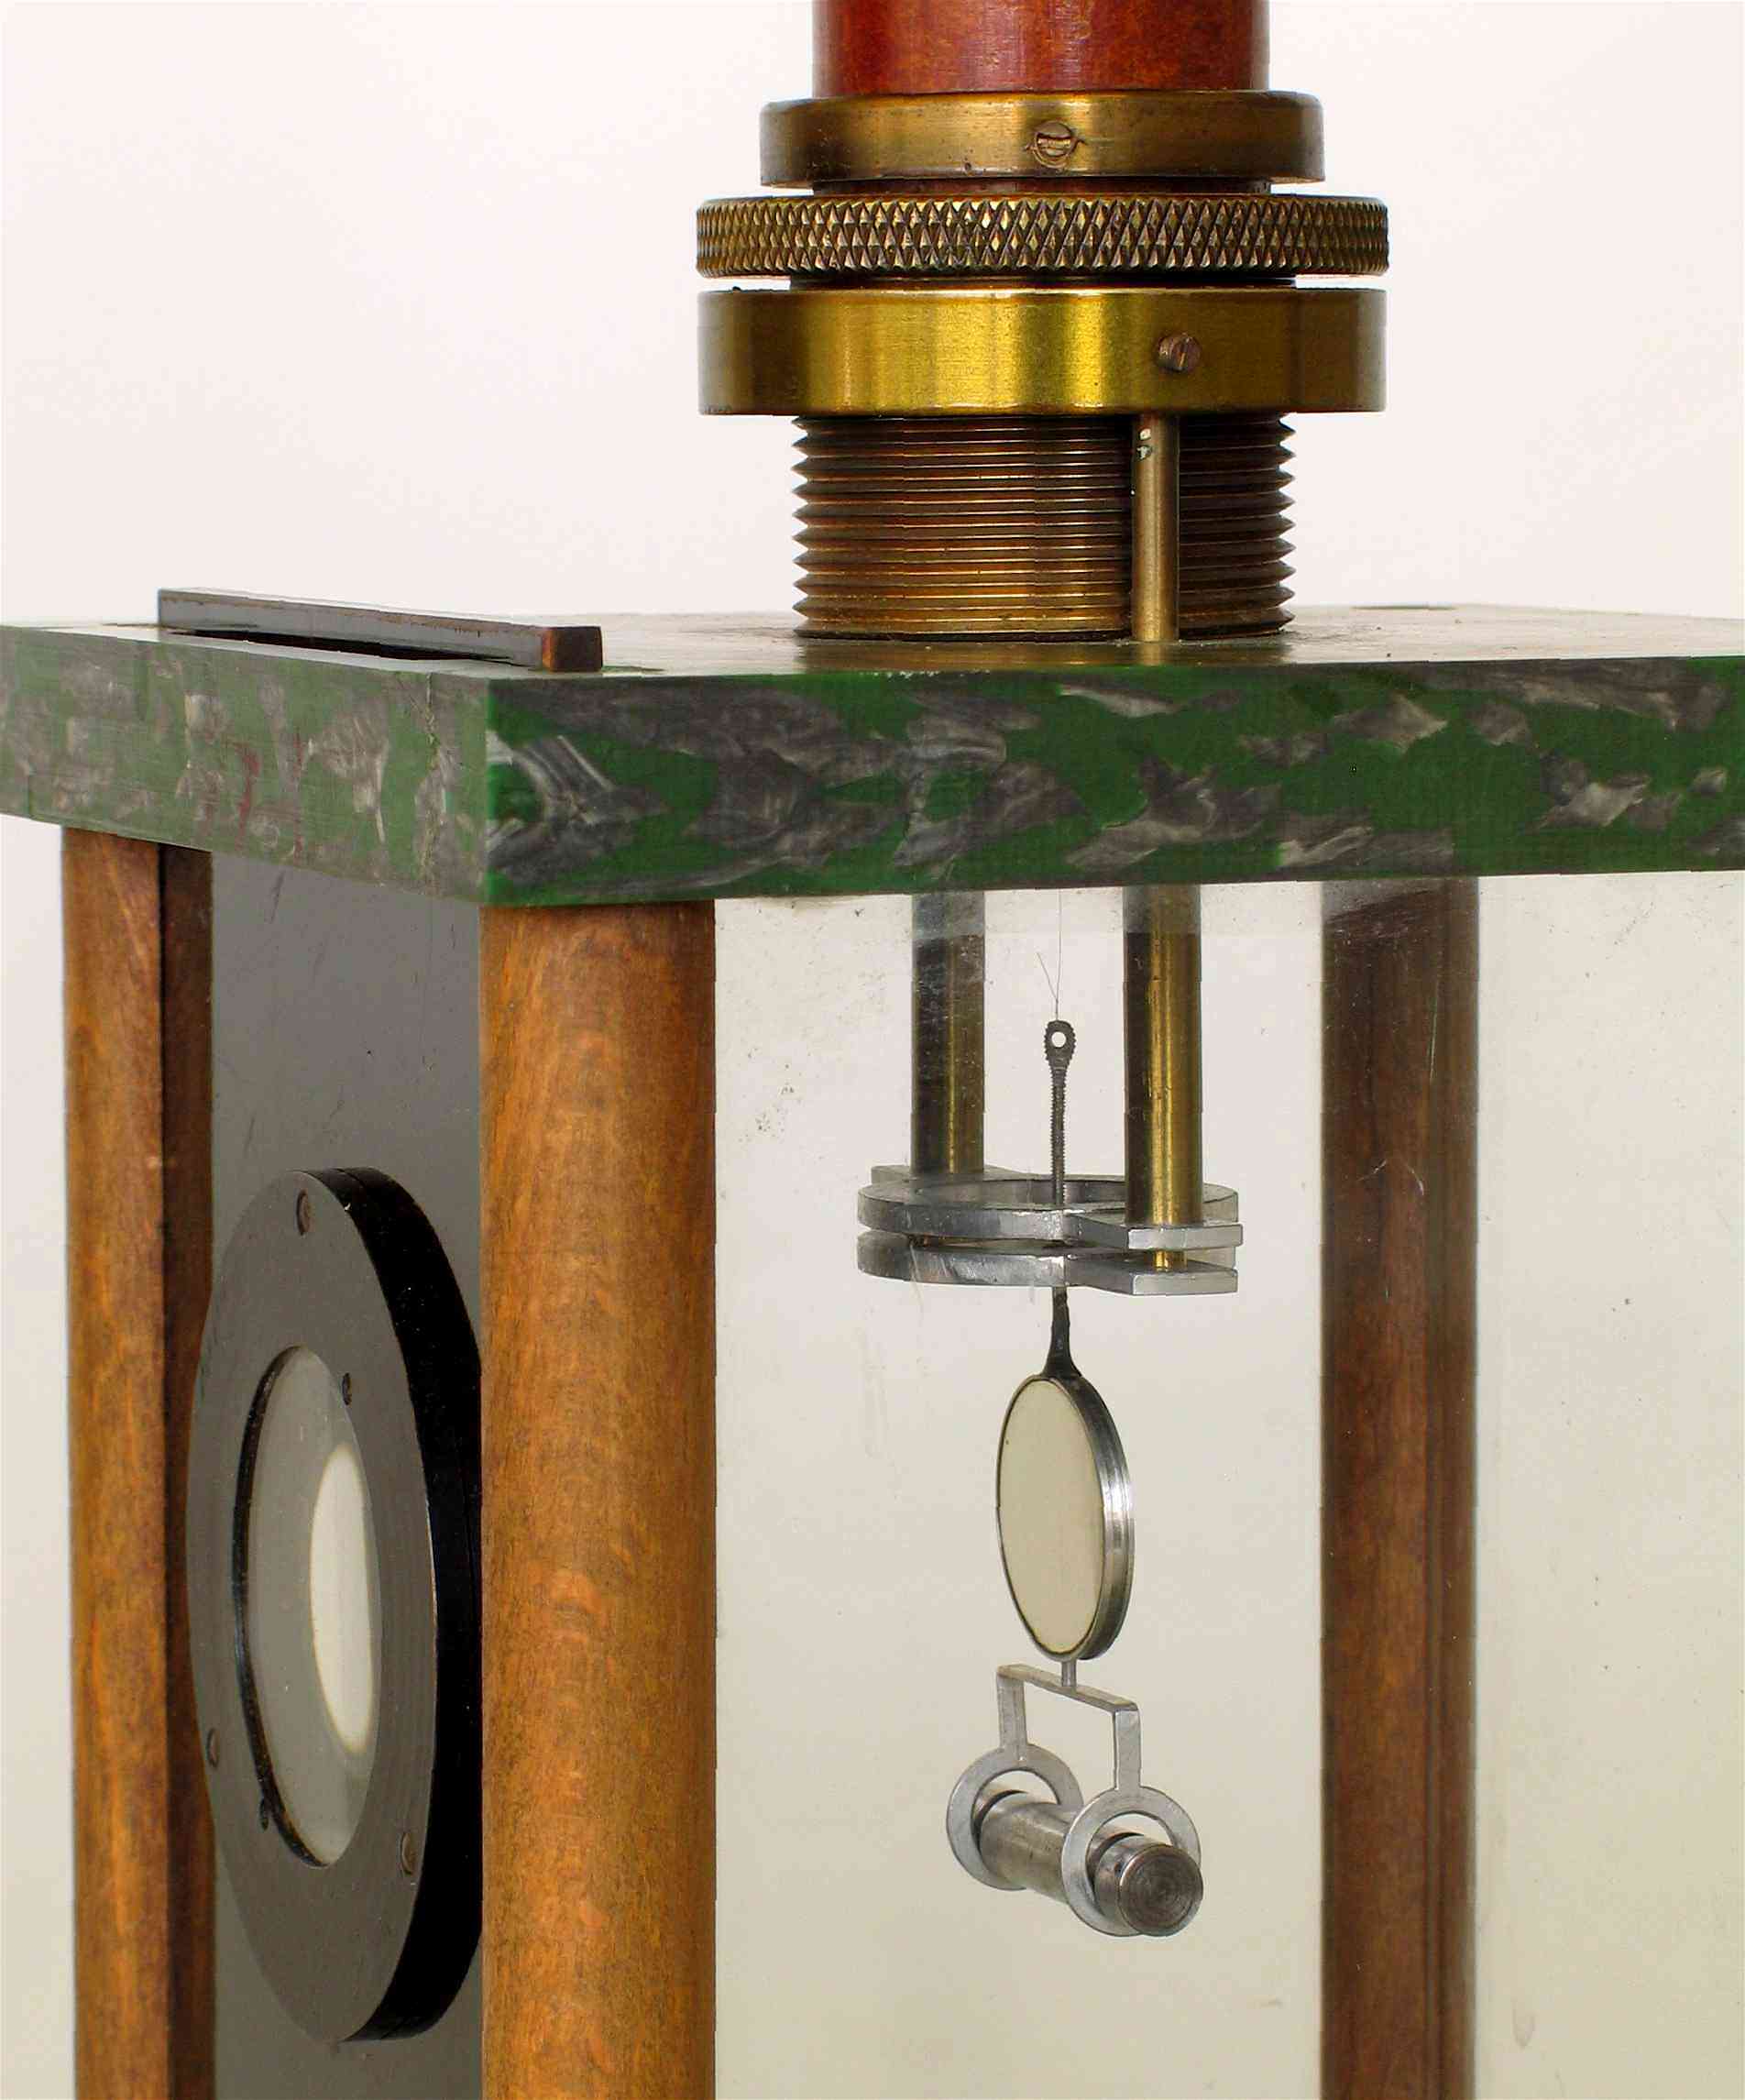 Magnétomètre
(pendule de torsion)